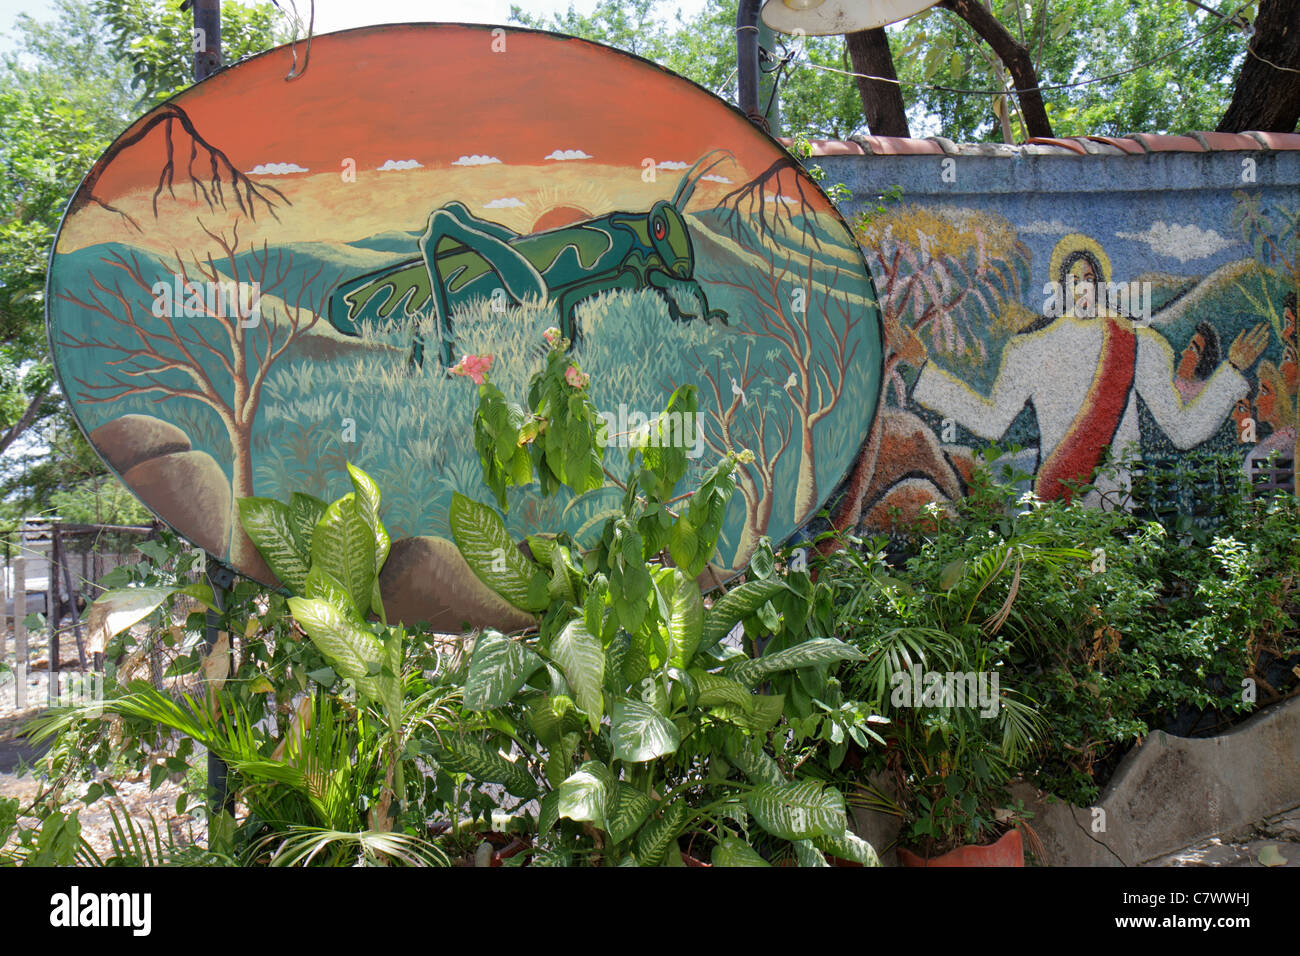 Managua Nicaragua,Barrio Willian Diaz,El Grillo Bar,restaurante restaurantes comida comedor cafés,jardín,patio,mural de pared,arte,follaje,plantas,grasshopp Foto de stock